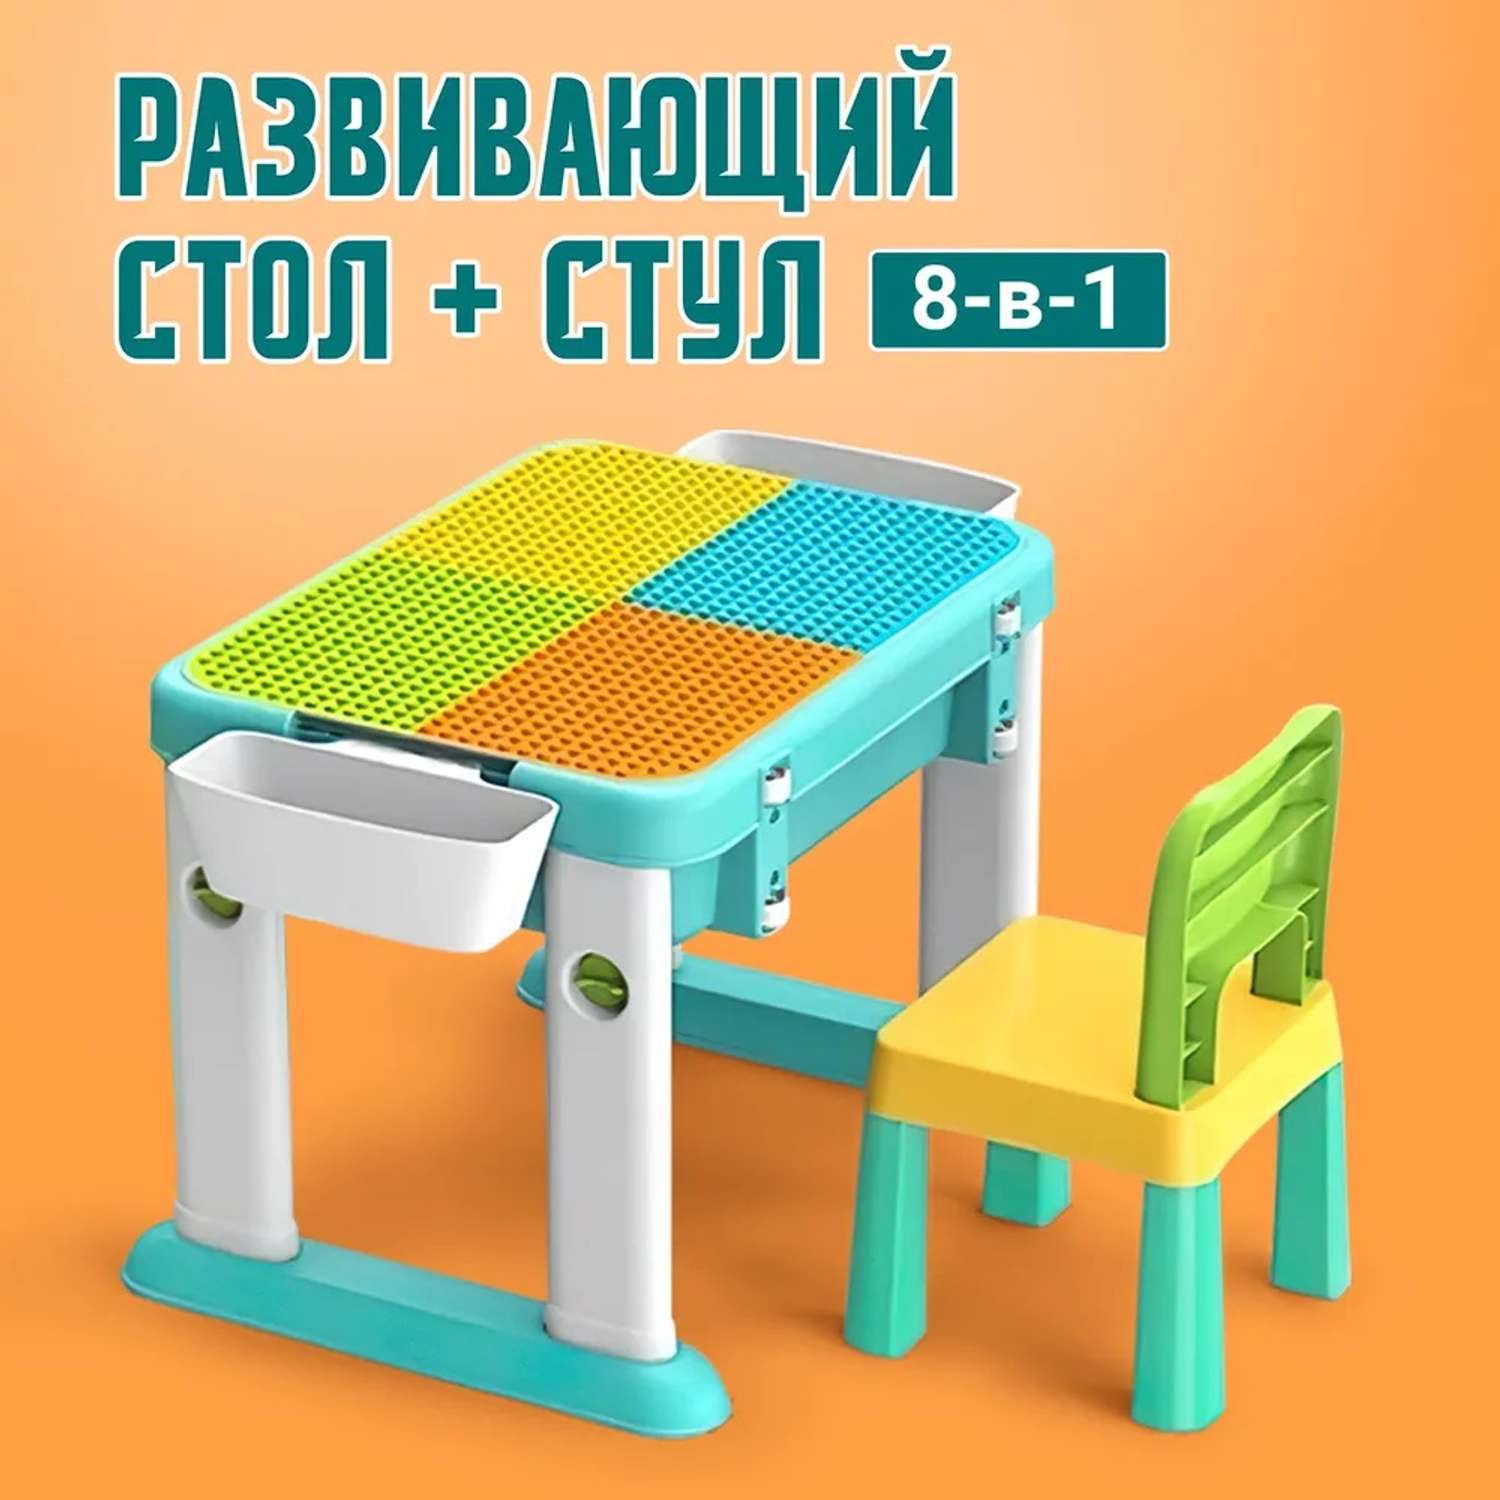 Развивающий стол и стул ТЕХНО детский для конструктора - фото 1